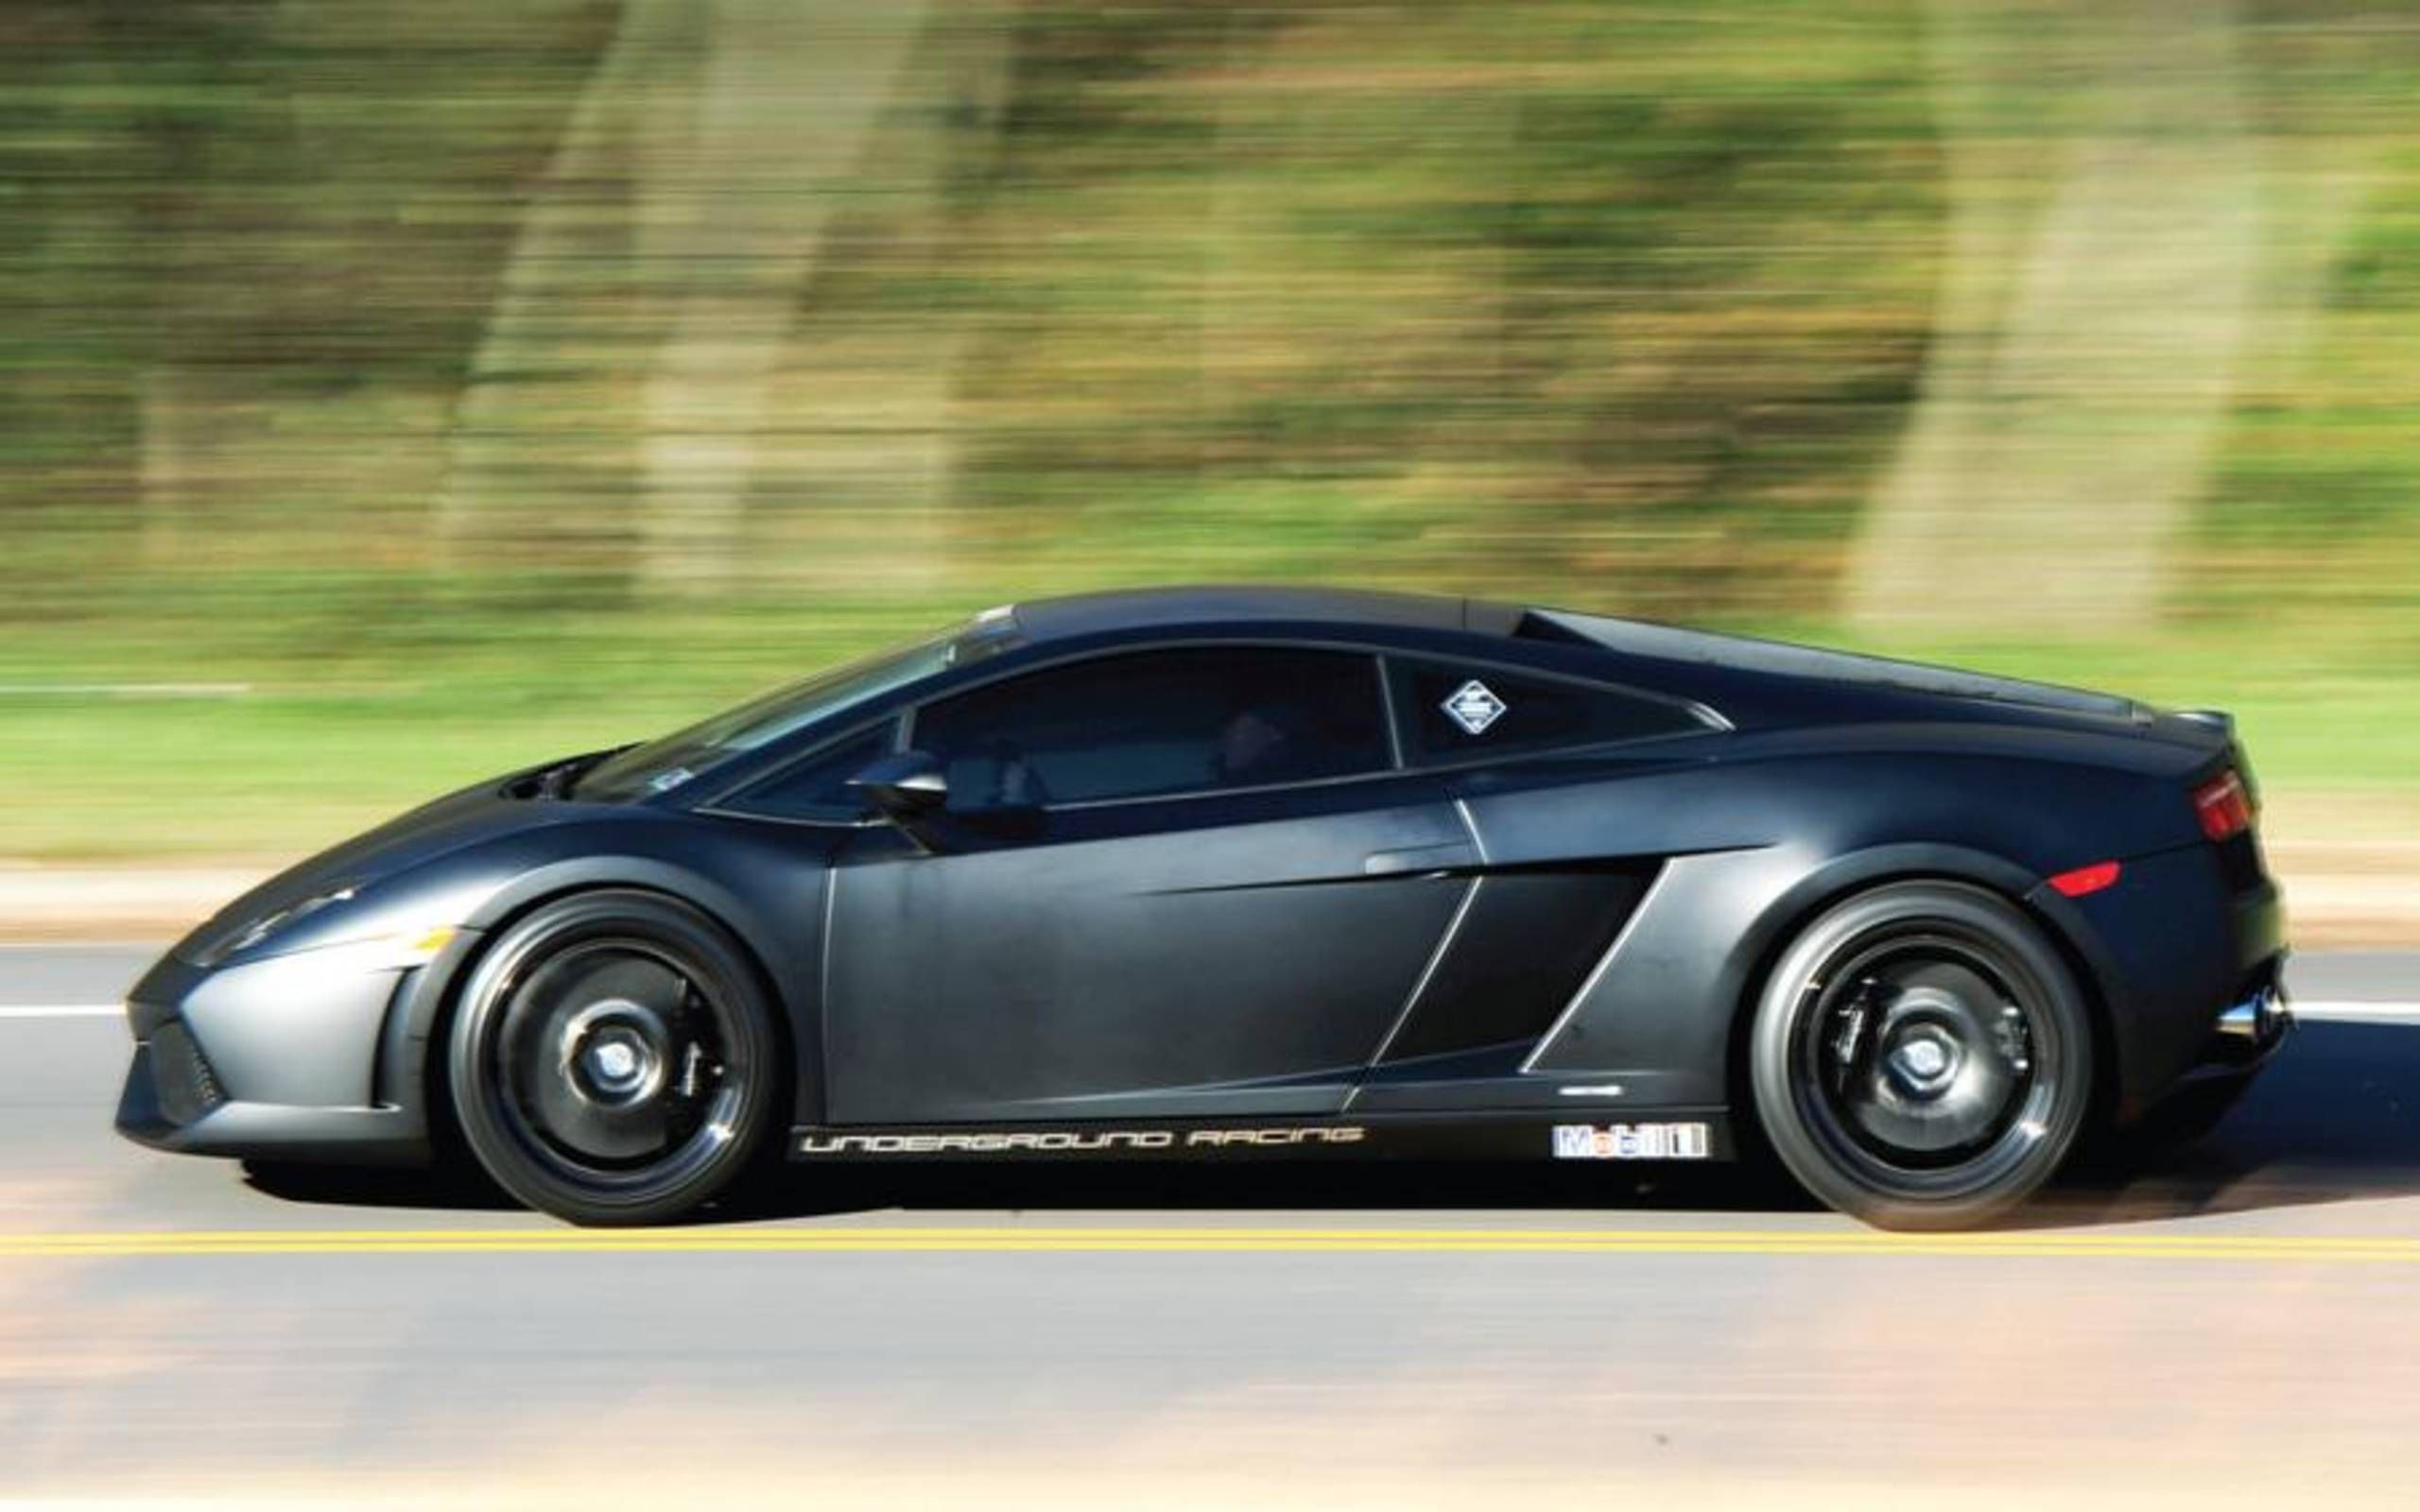 Underground Racing's twin-turbo Lamborghini Gallardo tempts with 1,000 hp